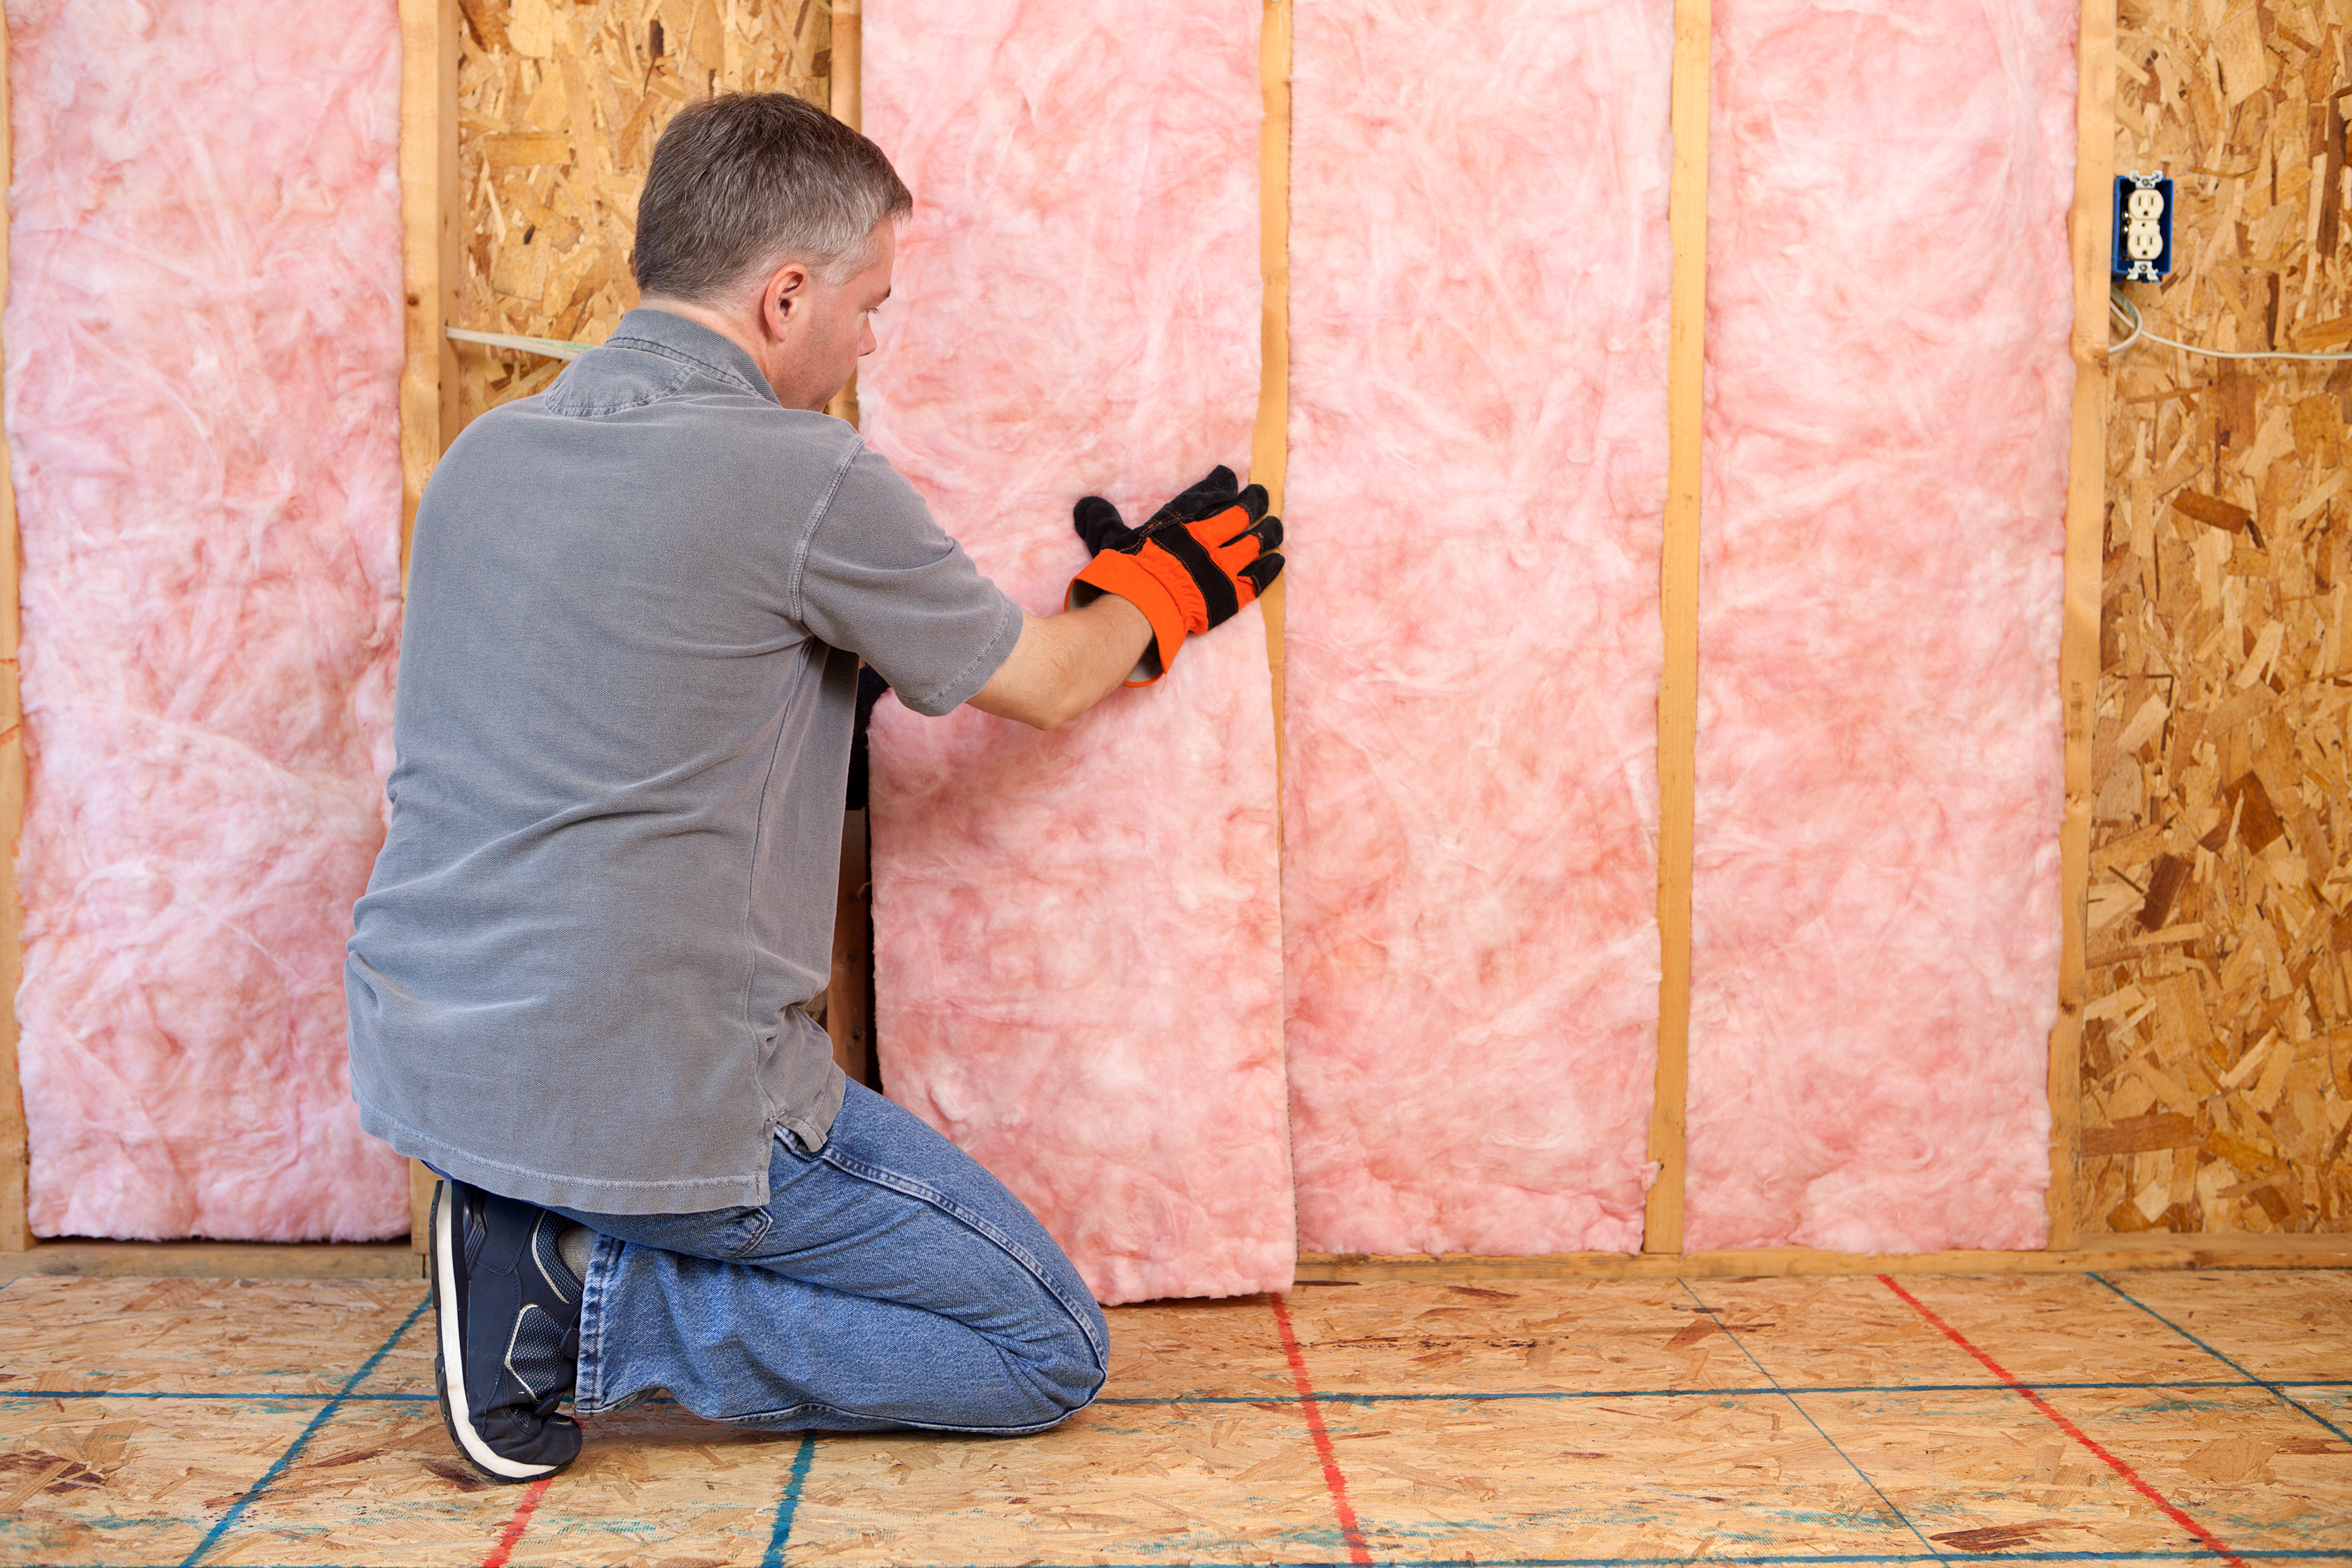 Person installing fiberglass insulation at home